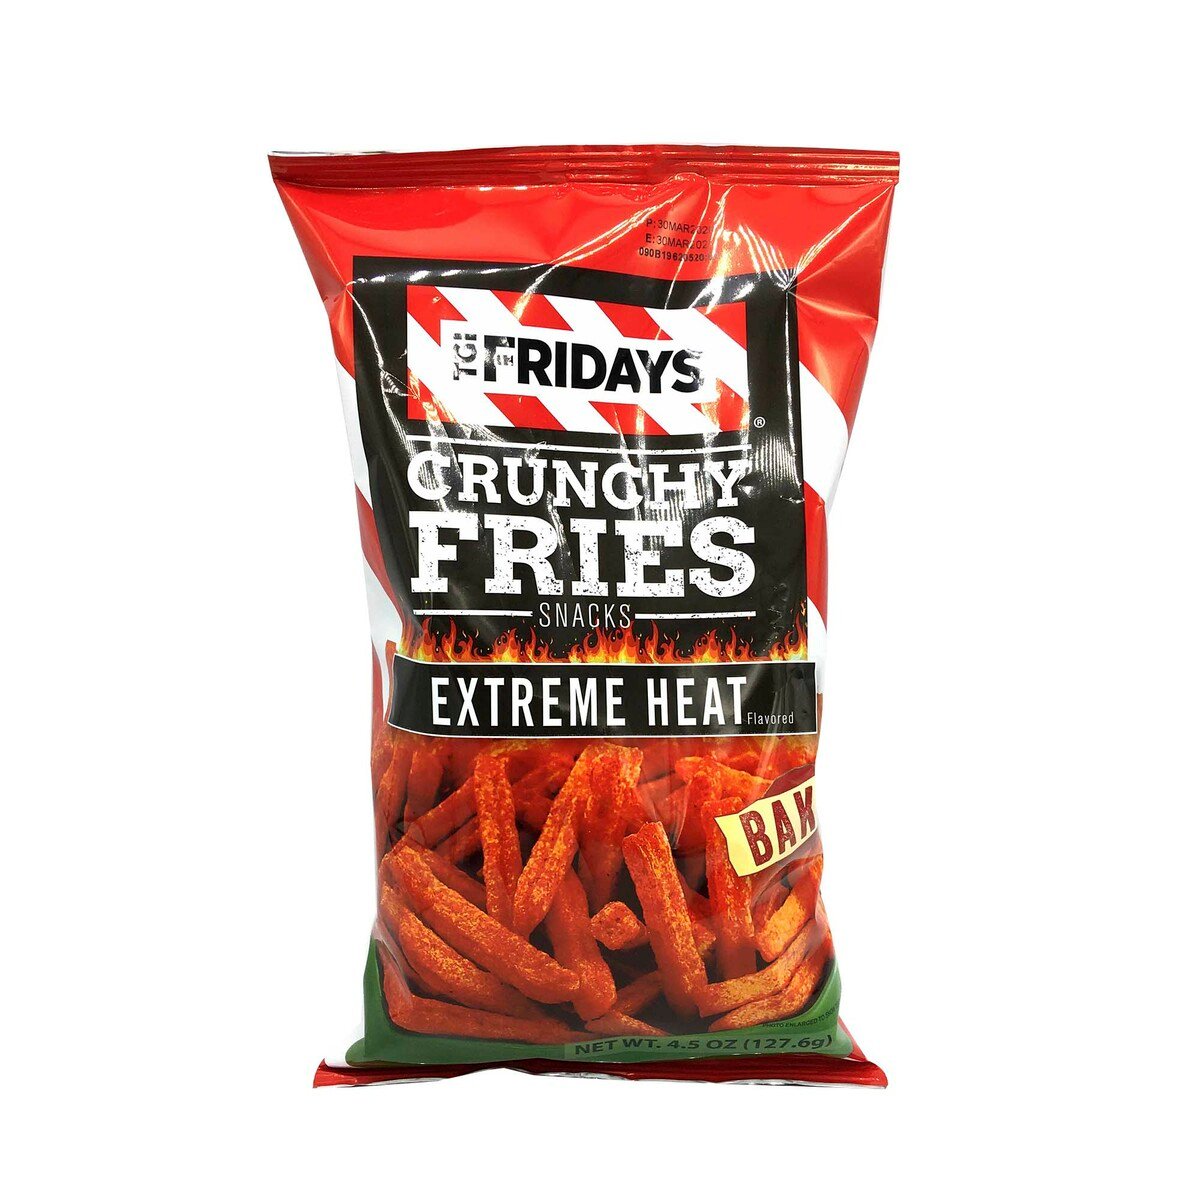 TGI Fridays Crunchy Fries Snacks Extreme Heat Flavored Baked 127.6 g